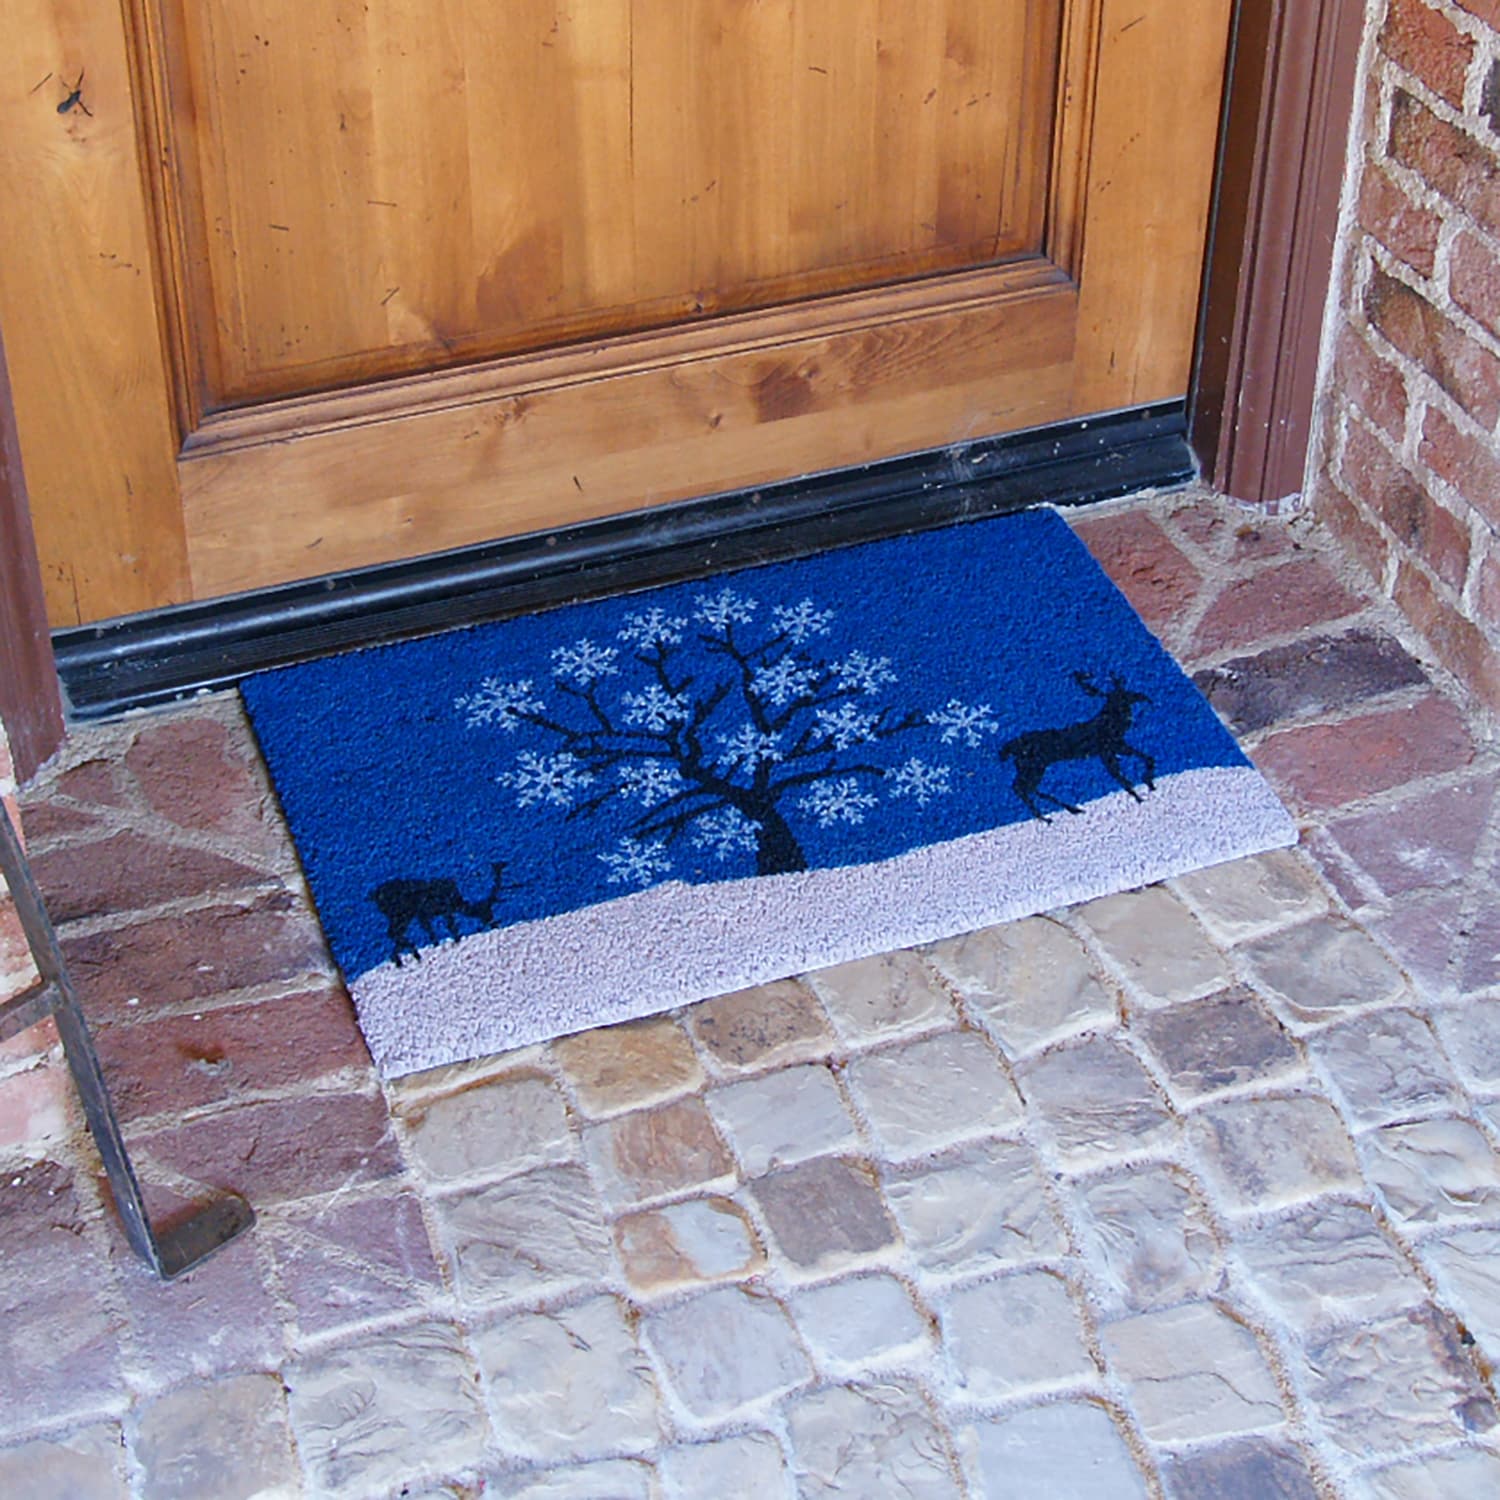 Christmas Decorative Doormat Let It Snow Winter Snowflake Non Slip Indoor  Outdoor Bathroom Entrance Mats Rugs Carpet - AliExpress